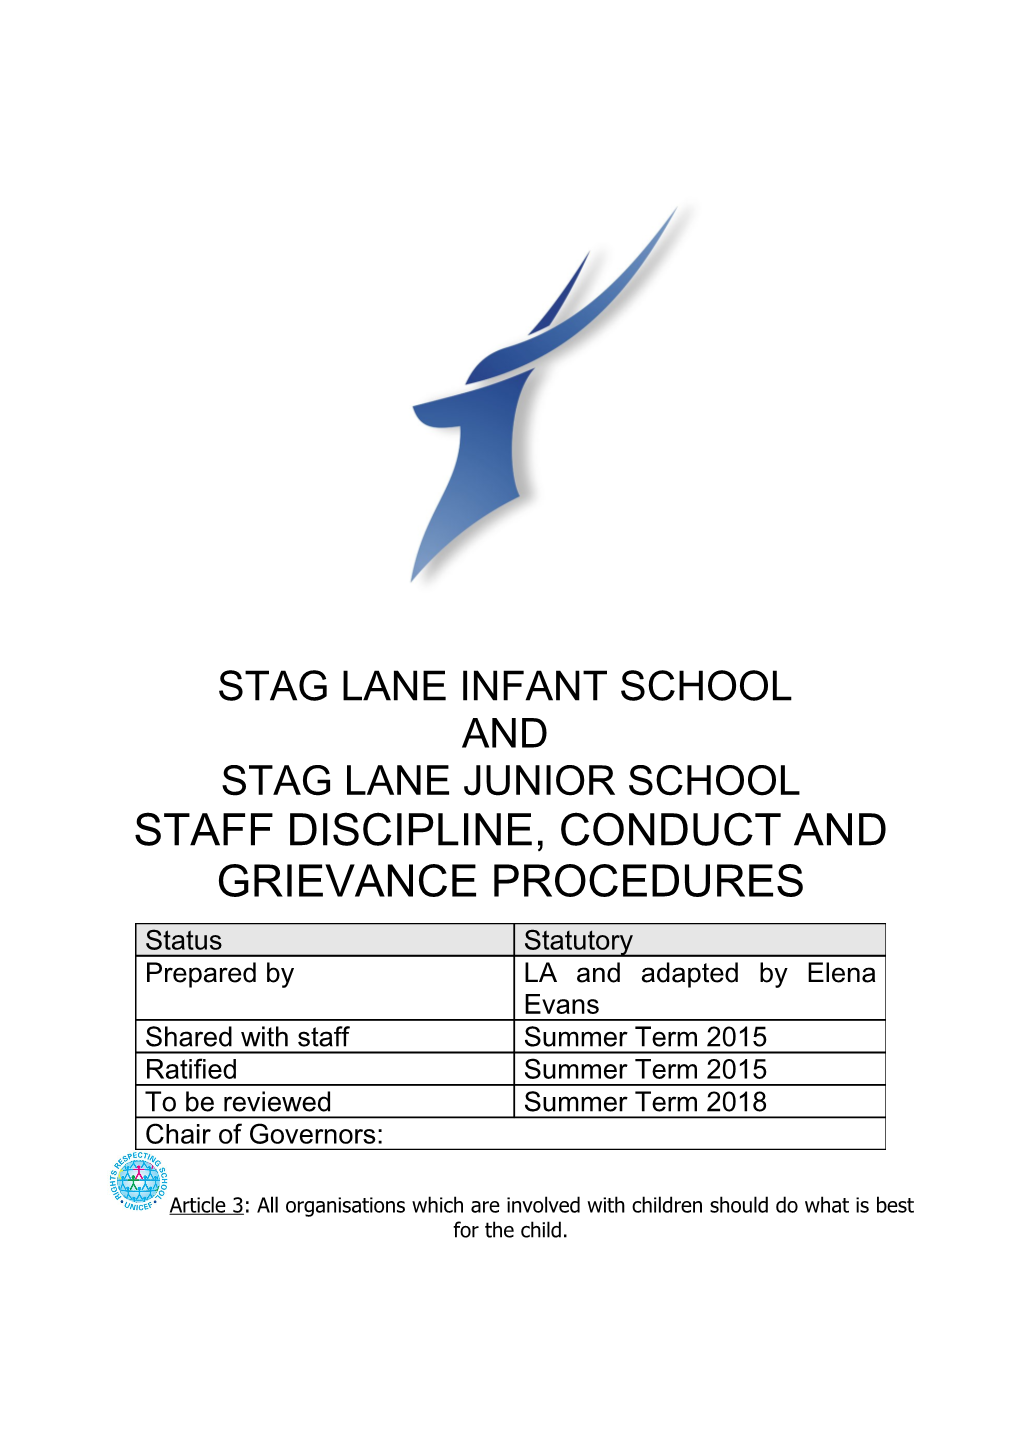 Stag Lane Infant School